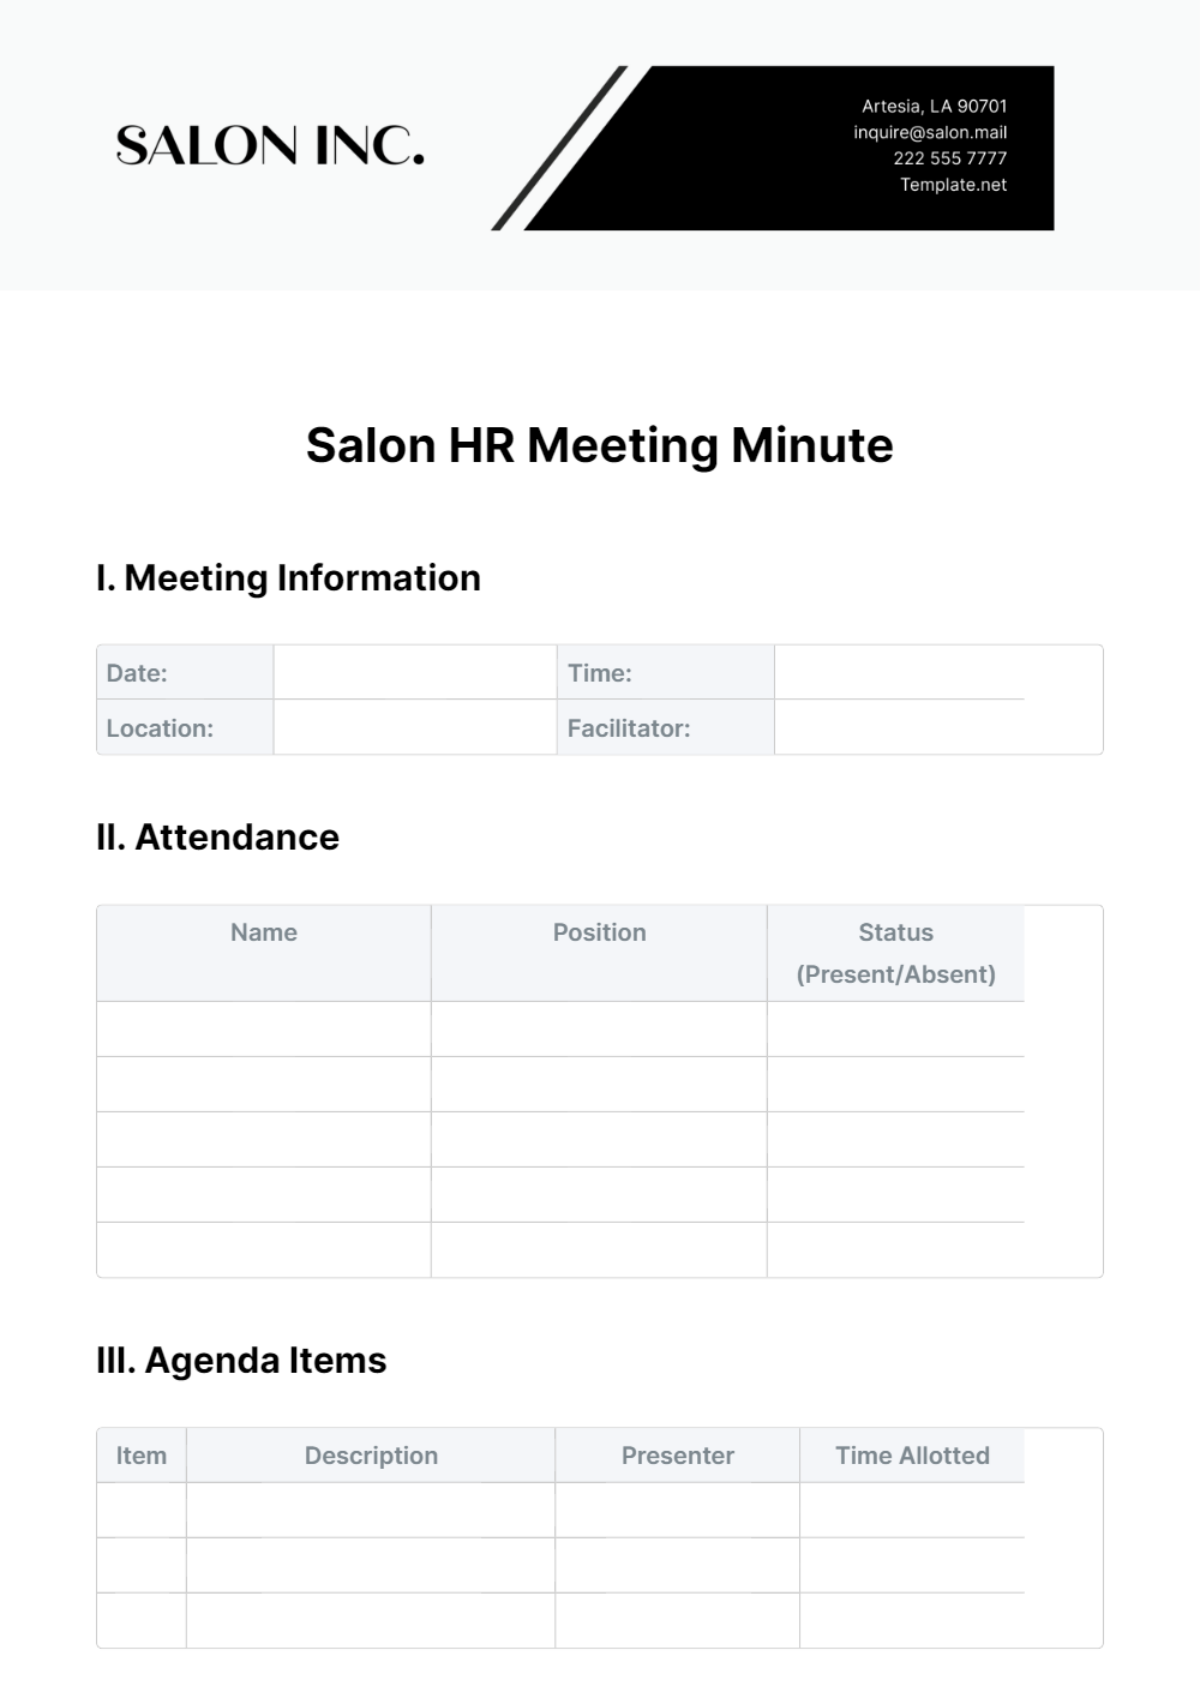 Free Salon HR Meeting Minute Template